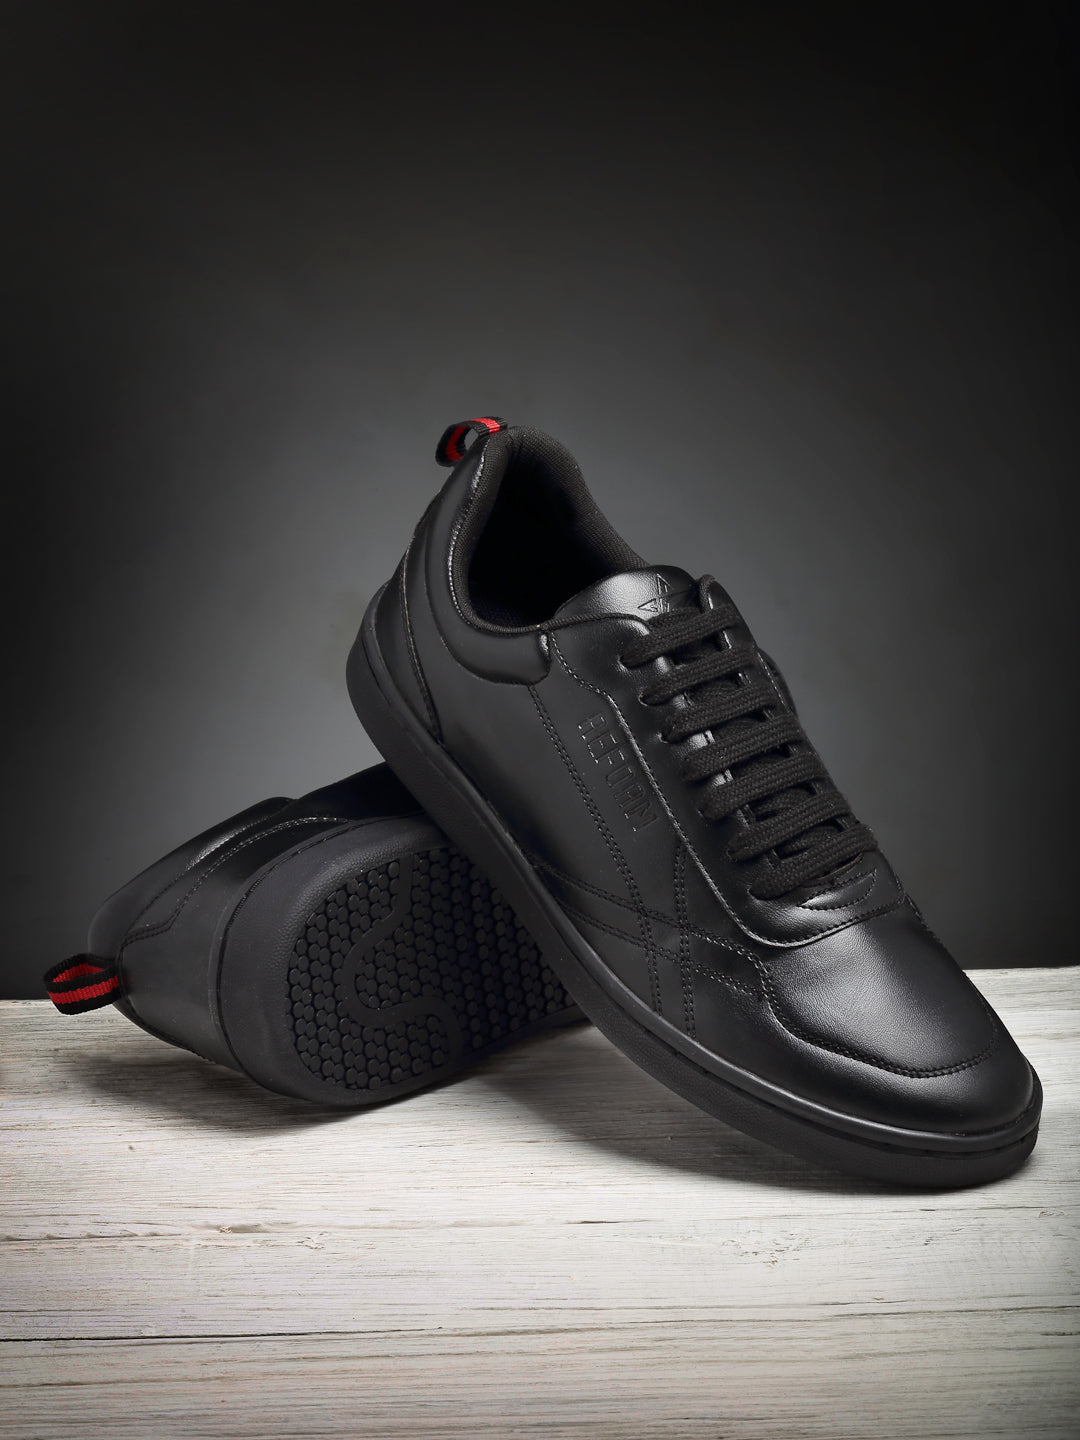 KaLI_store Men Shoes Men's Casual Oxford Shoes Breathable Flat Fashion  Sneakers,Black - Walmart.com